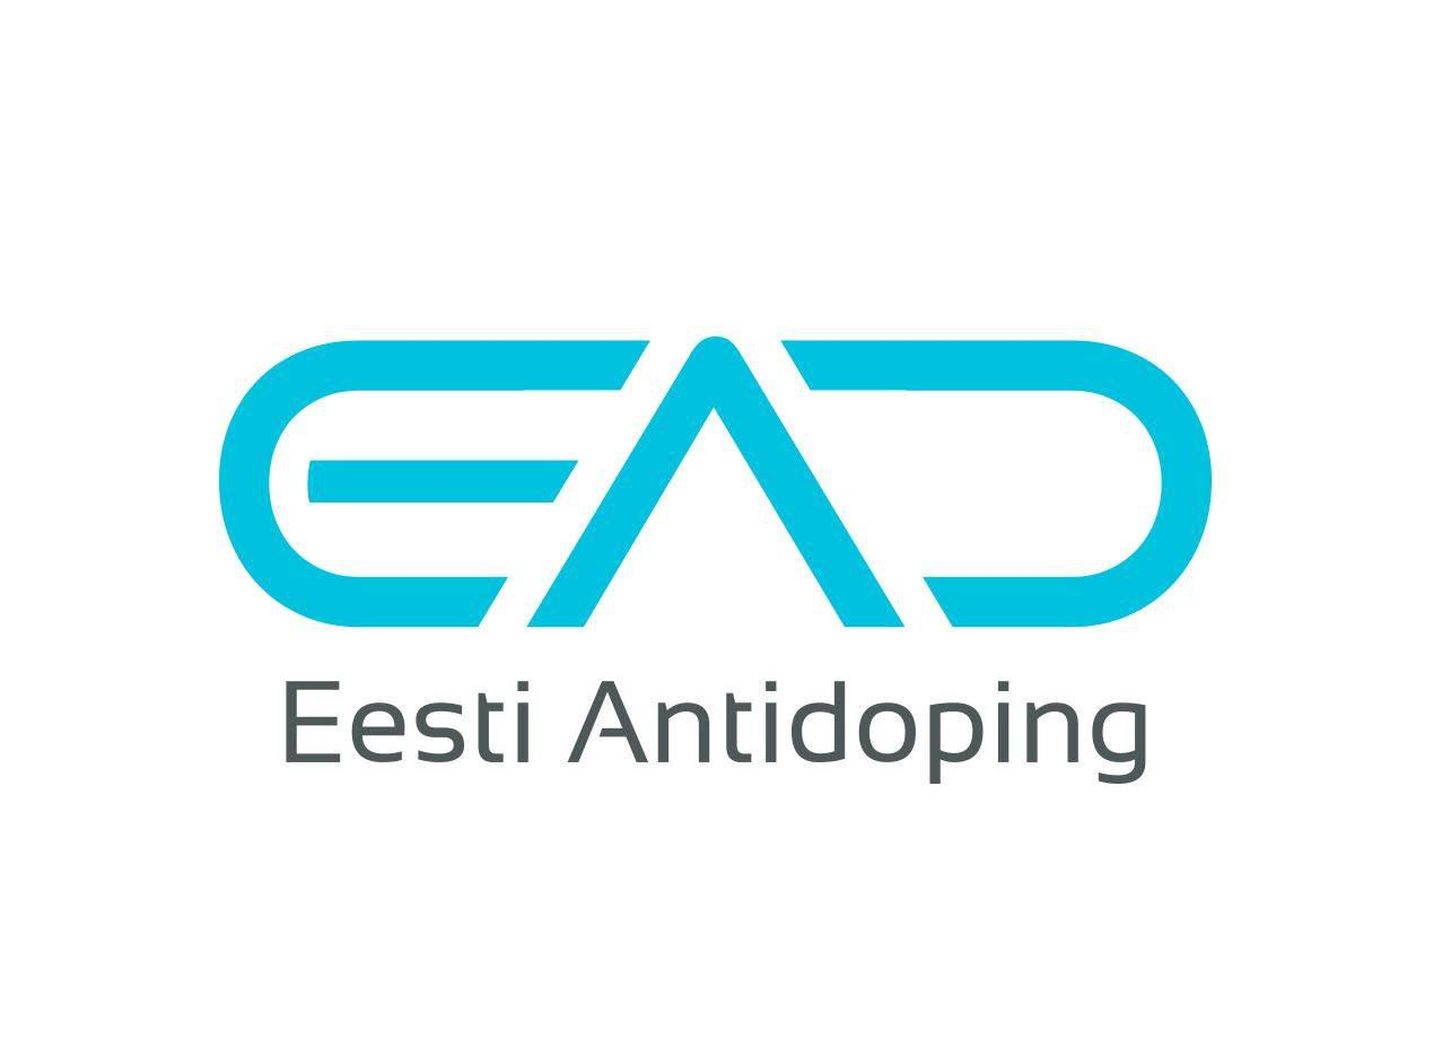 SA Eesti Antidoping logo.